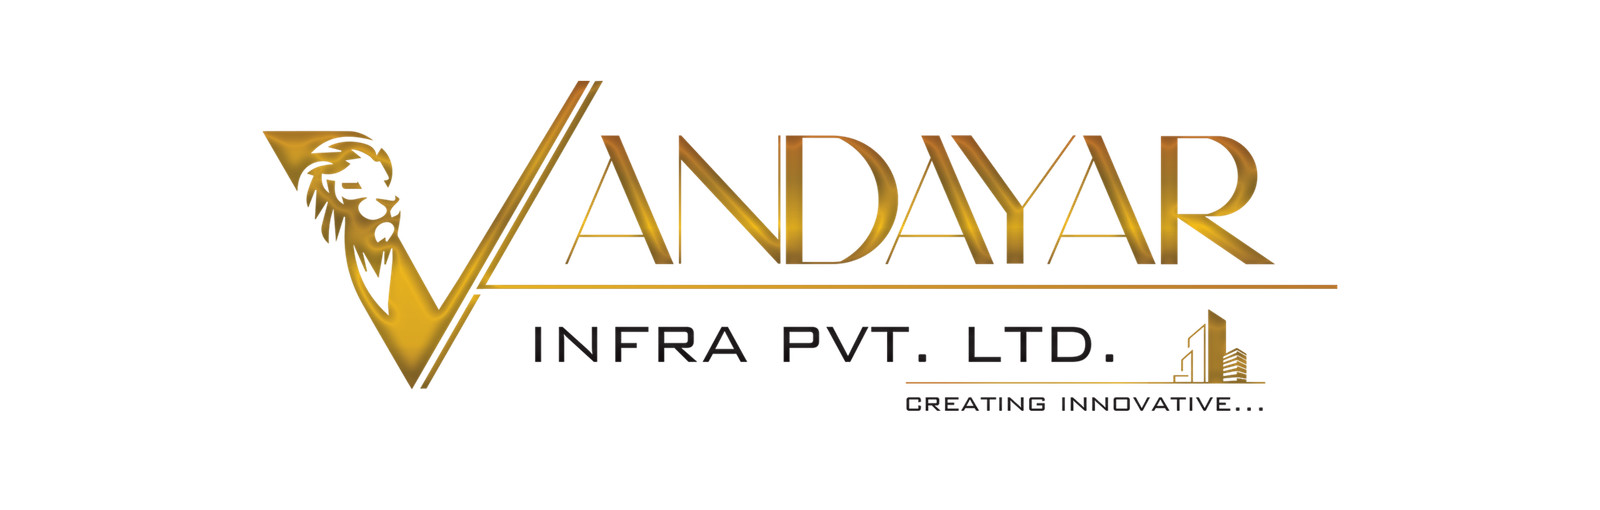 Vandayar Infra Pvt. Ltd.